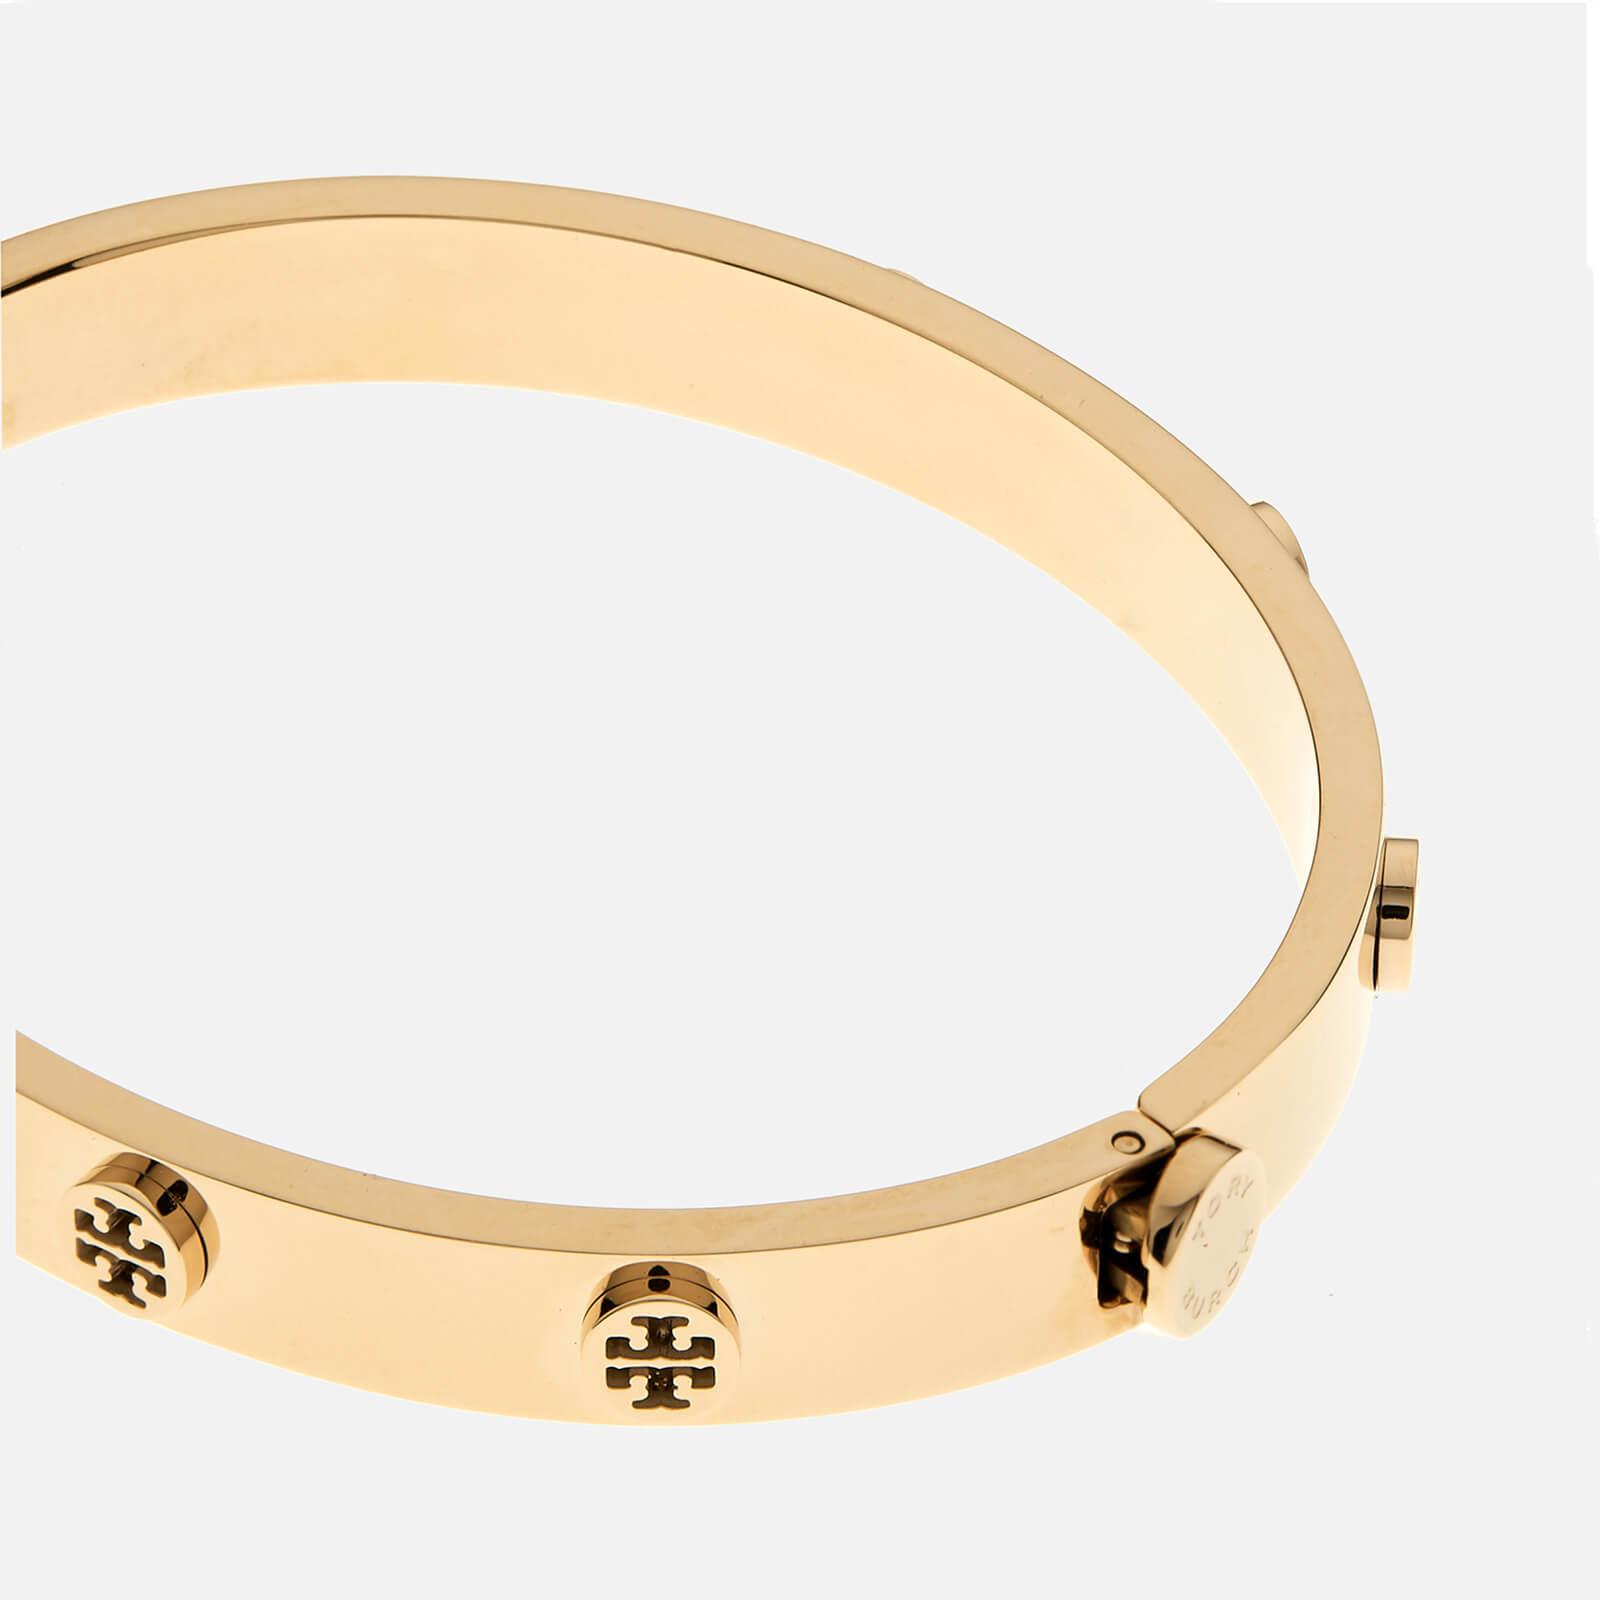 Tory Burch Miller Stud Hinge Bracelet in Gold (Metallic) - Lyst